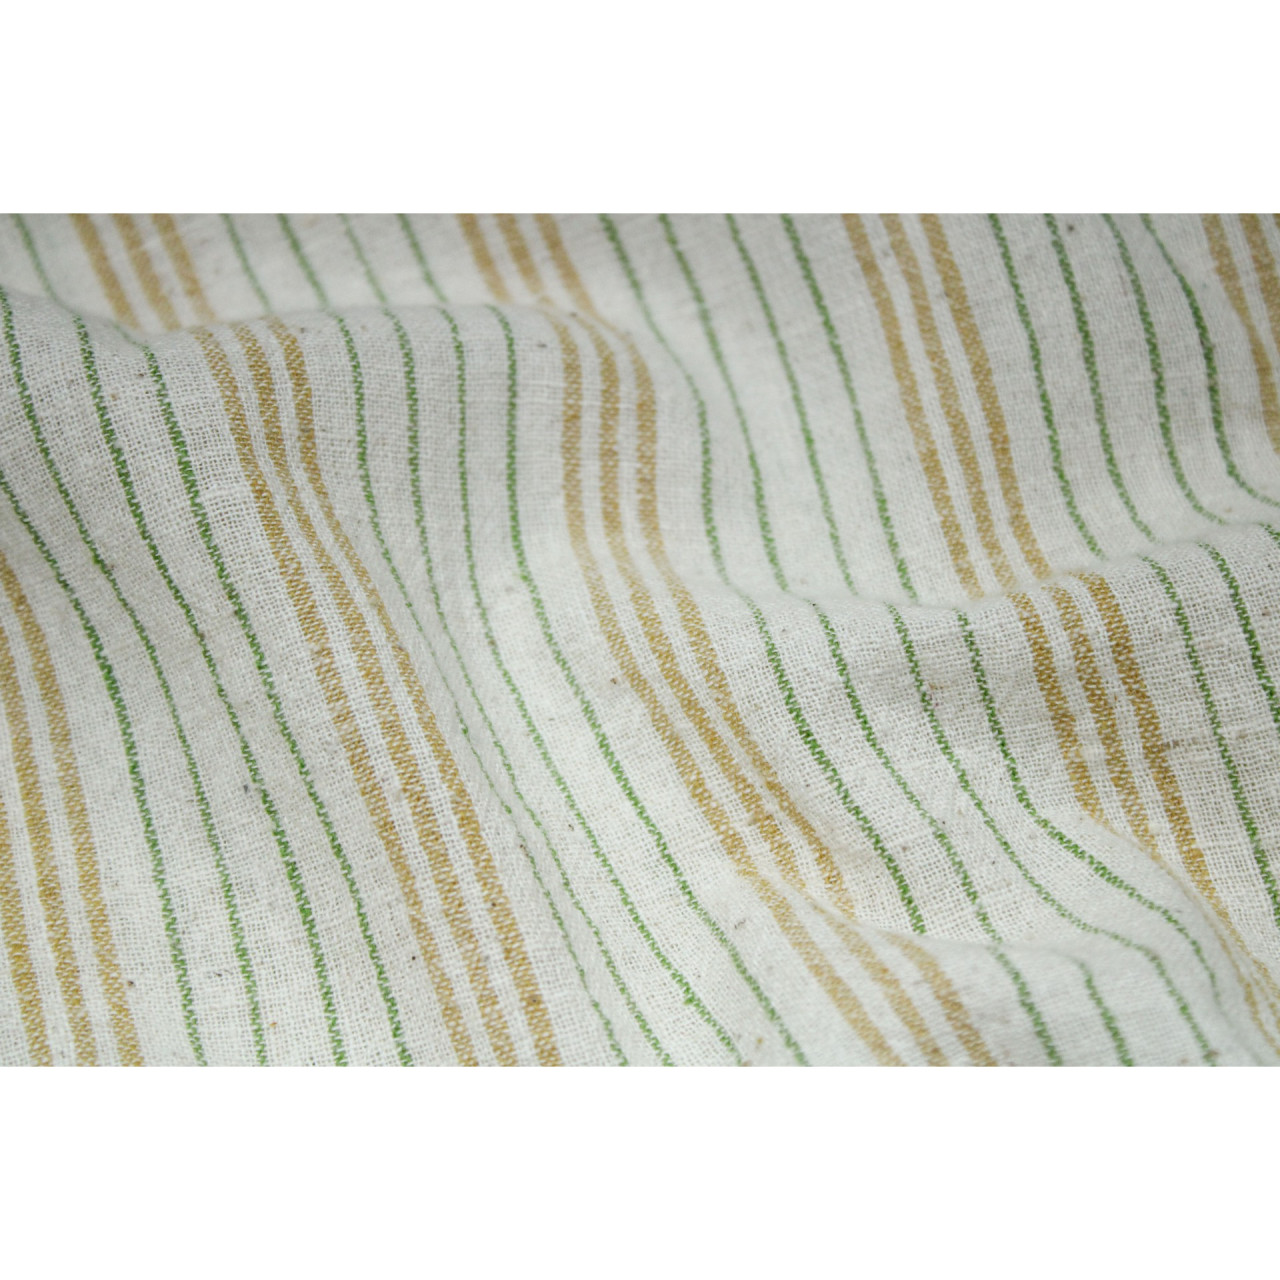 (2127) Kala cotton Azo-free dyed Kutchy yardage from Kutch - Green, yellow, white, stripes, plain